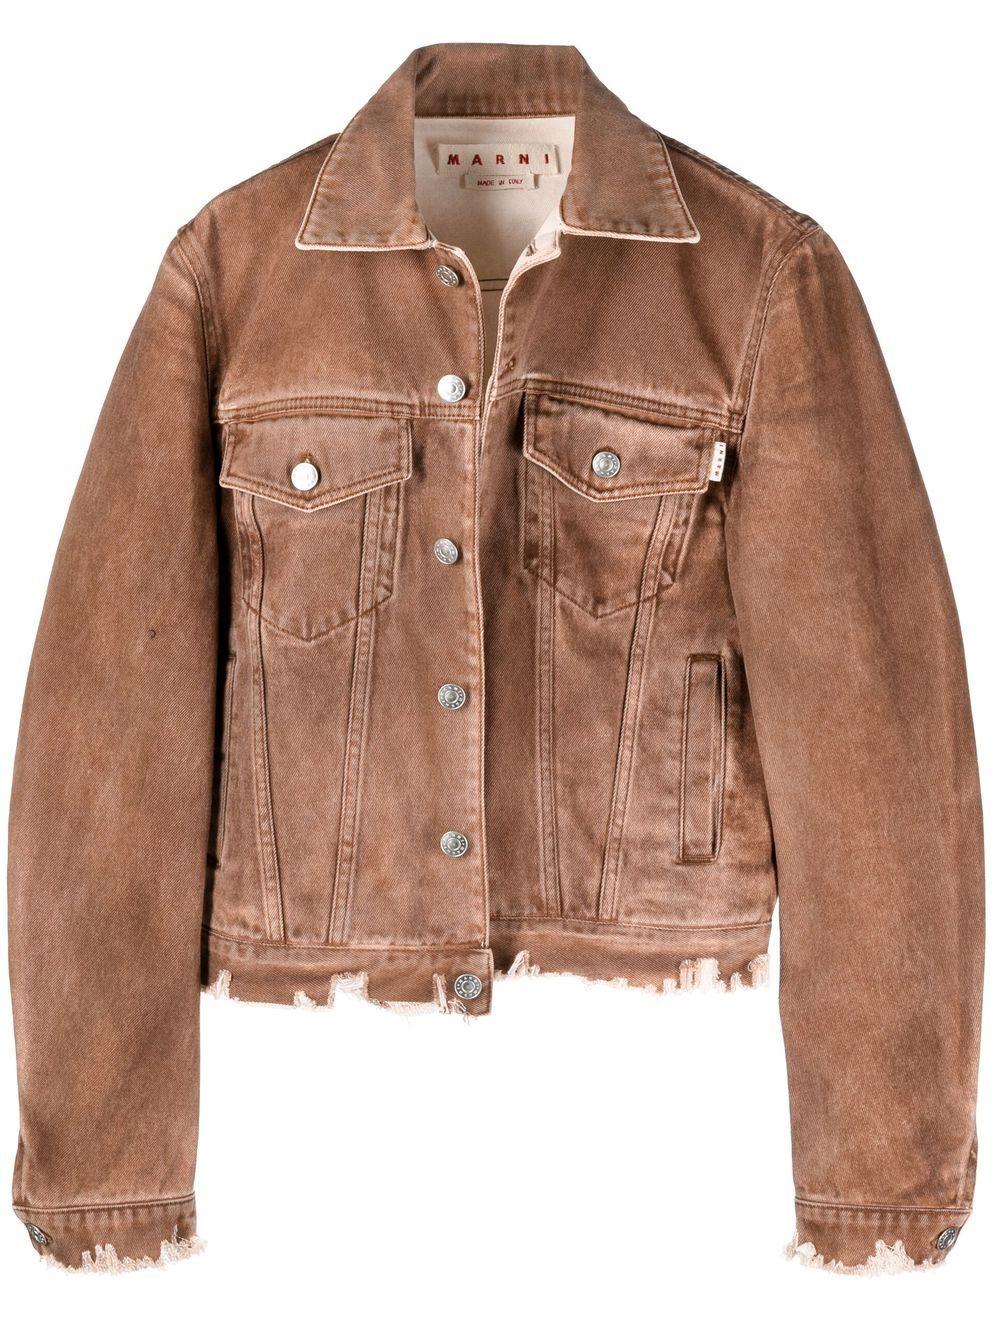 Marni Distressed-effect Denim Jacket in Brown for Men